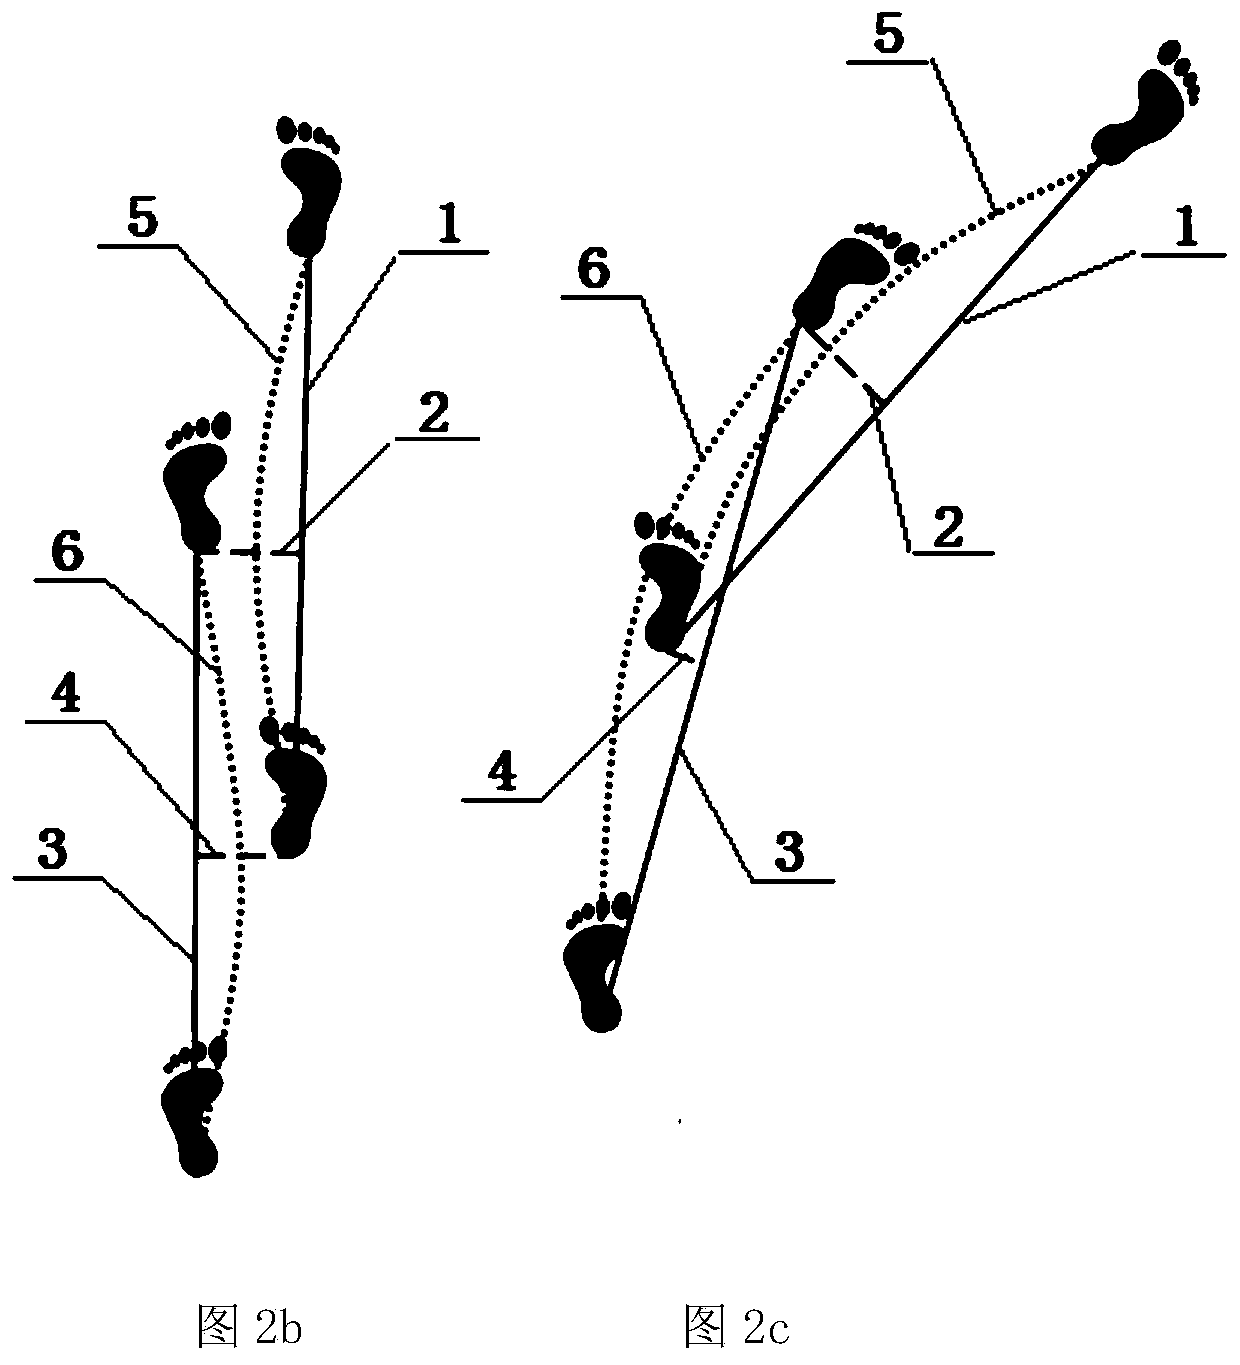 Method for determining step width in gait based on walking track data